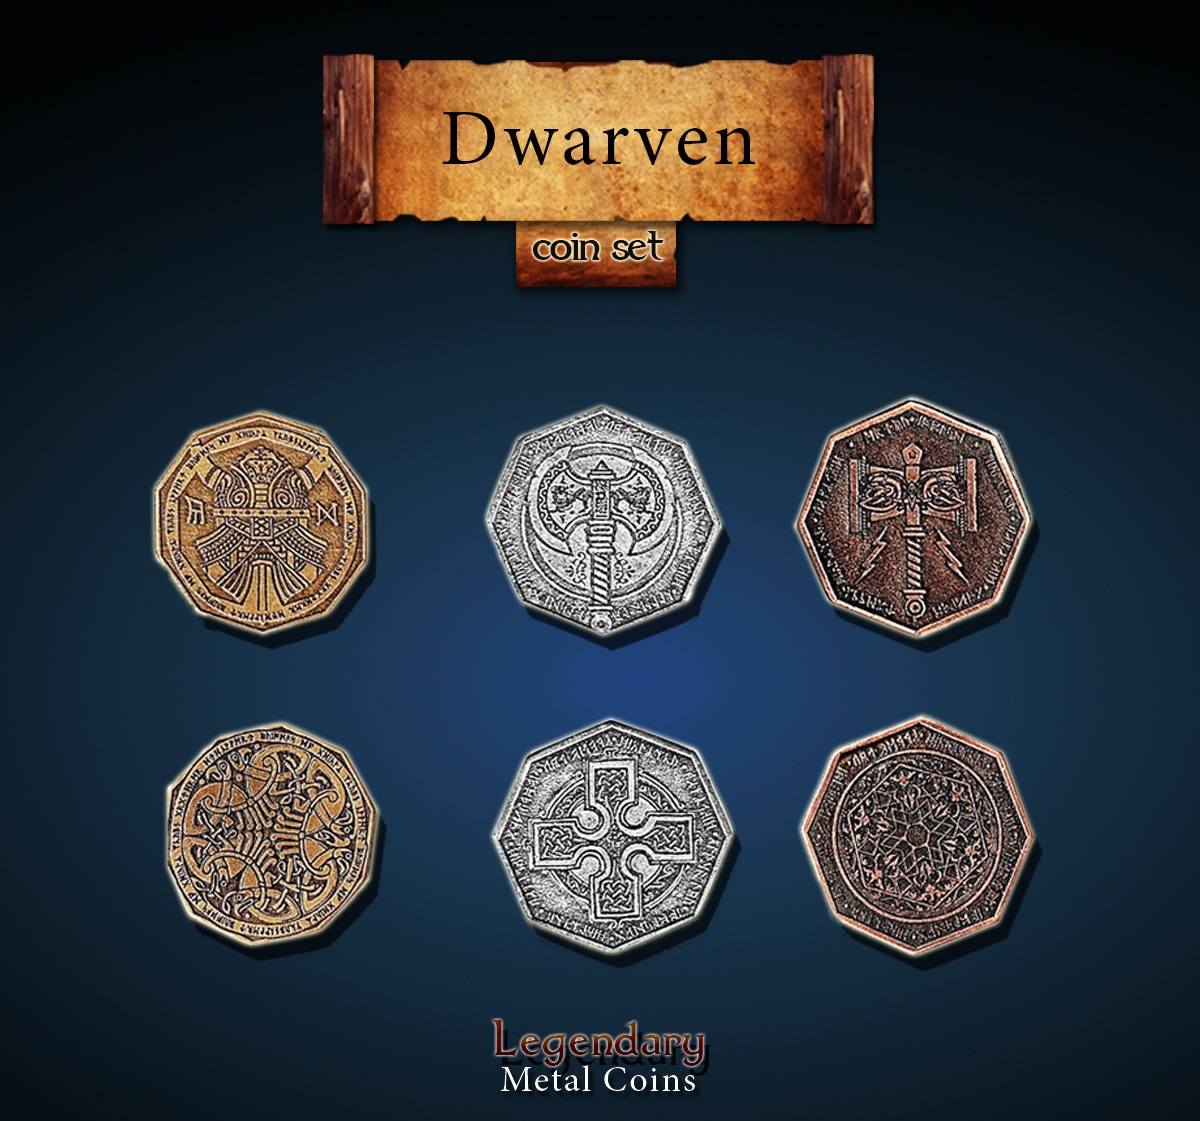 Dwarven Coin Set Legendary Metal Coins